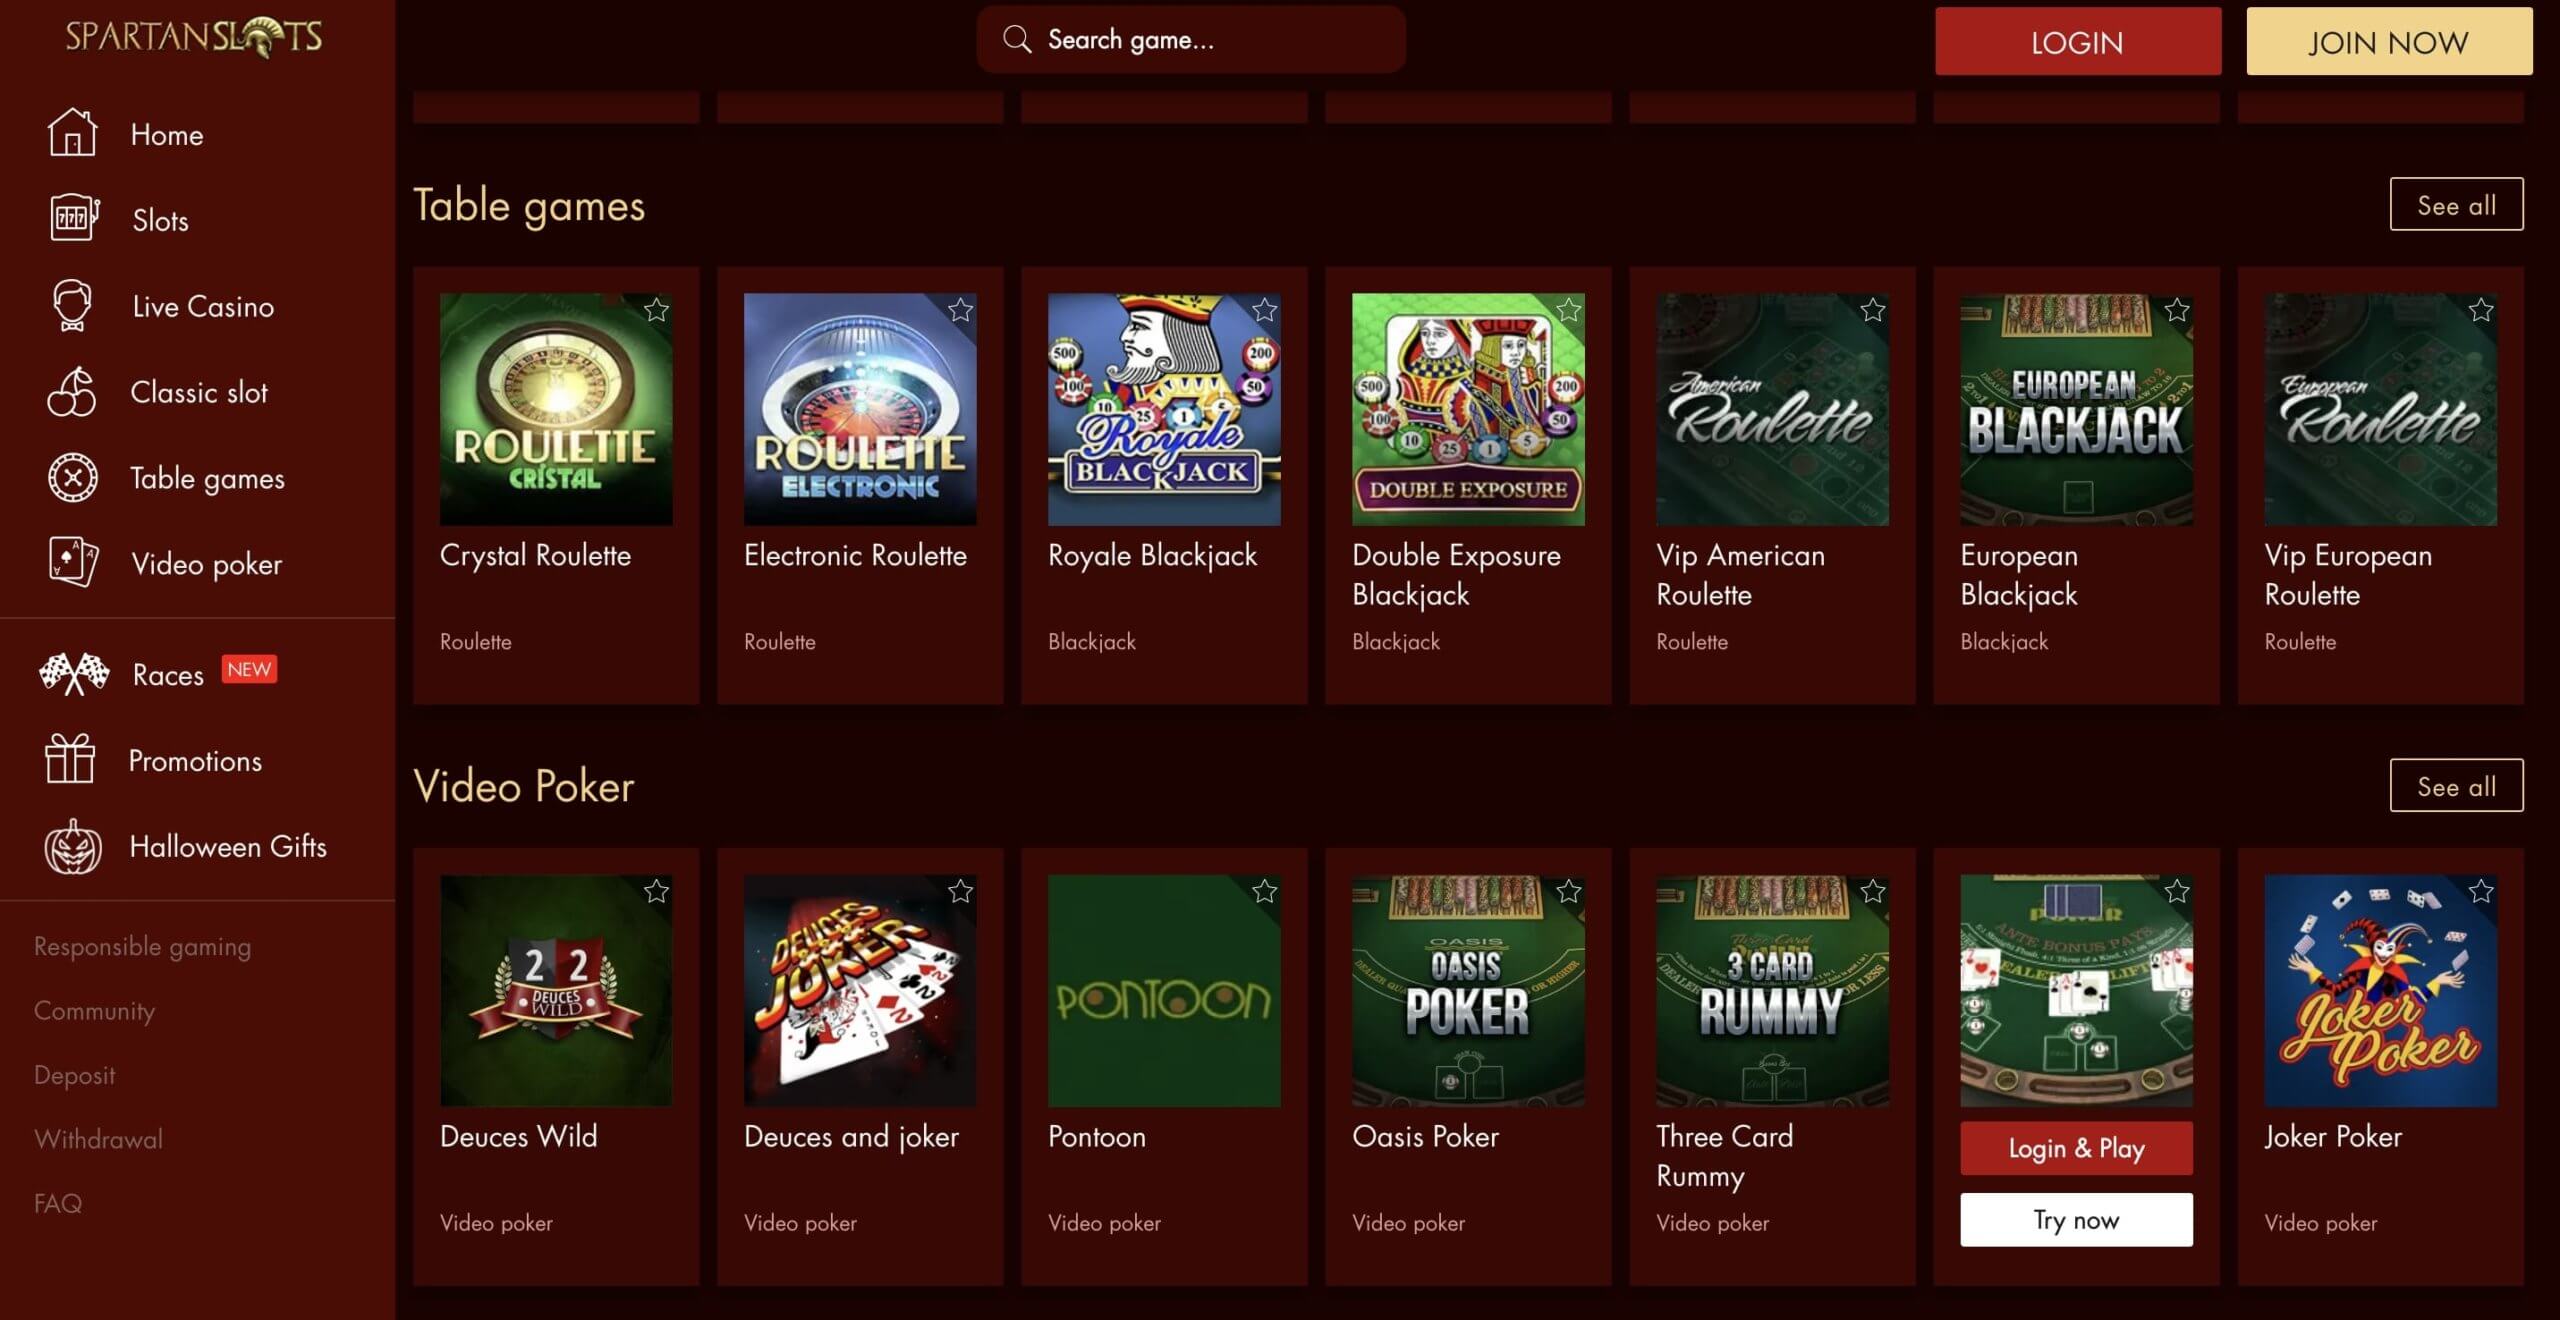 Spartan Slots Online Casino Games